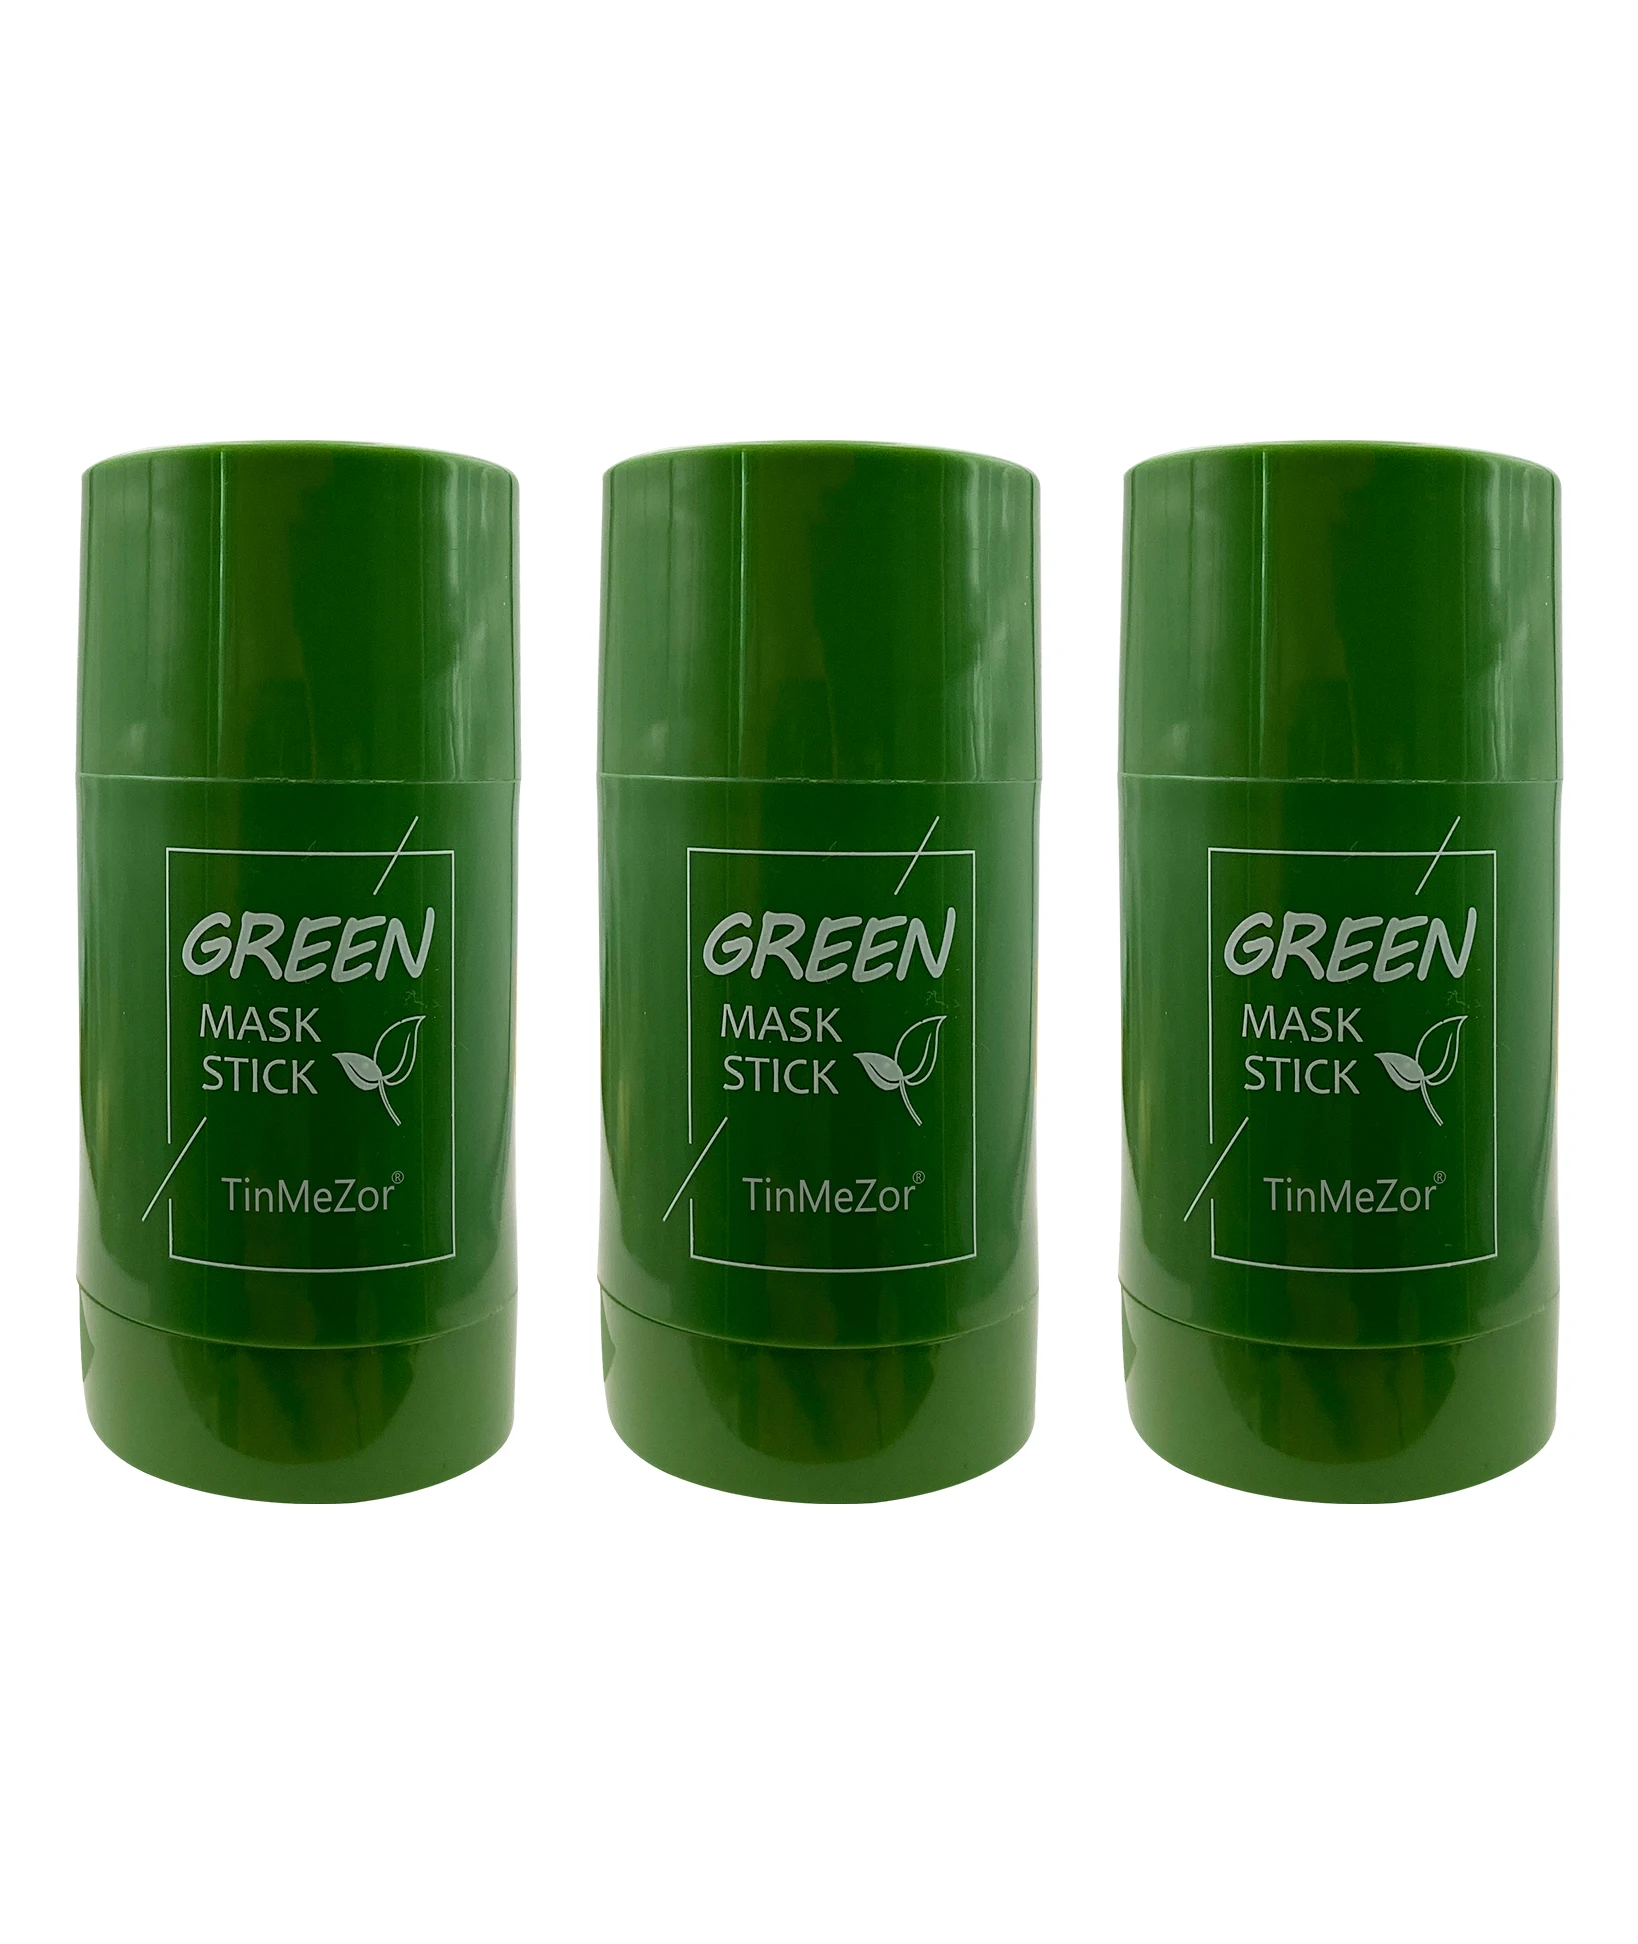 Tea cleansing mask green ULTA Beauty